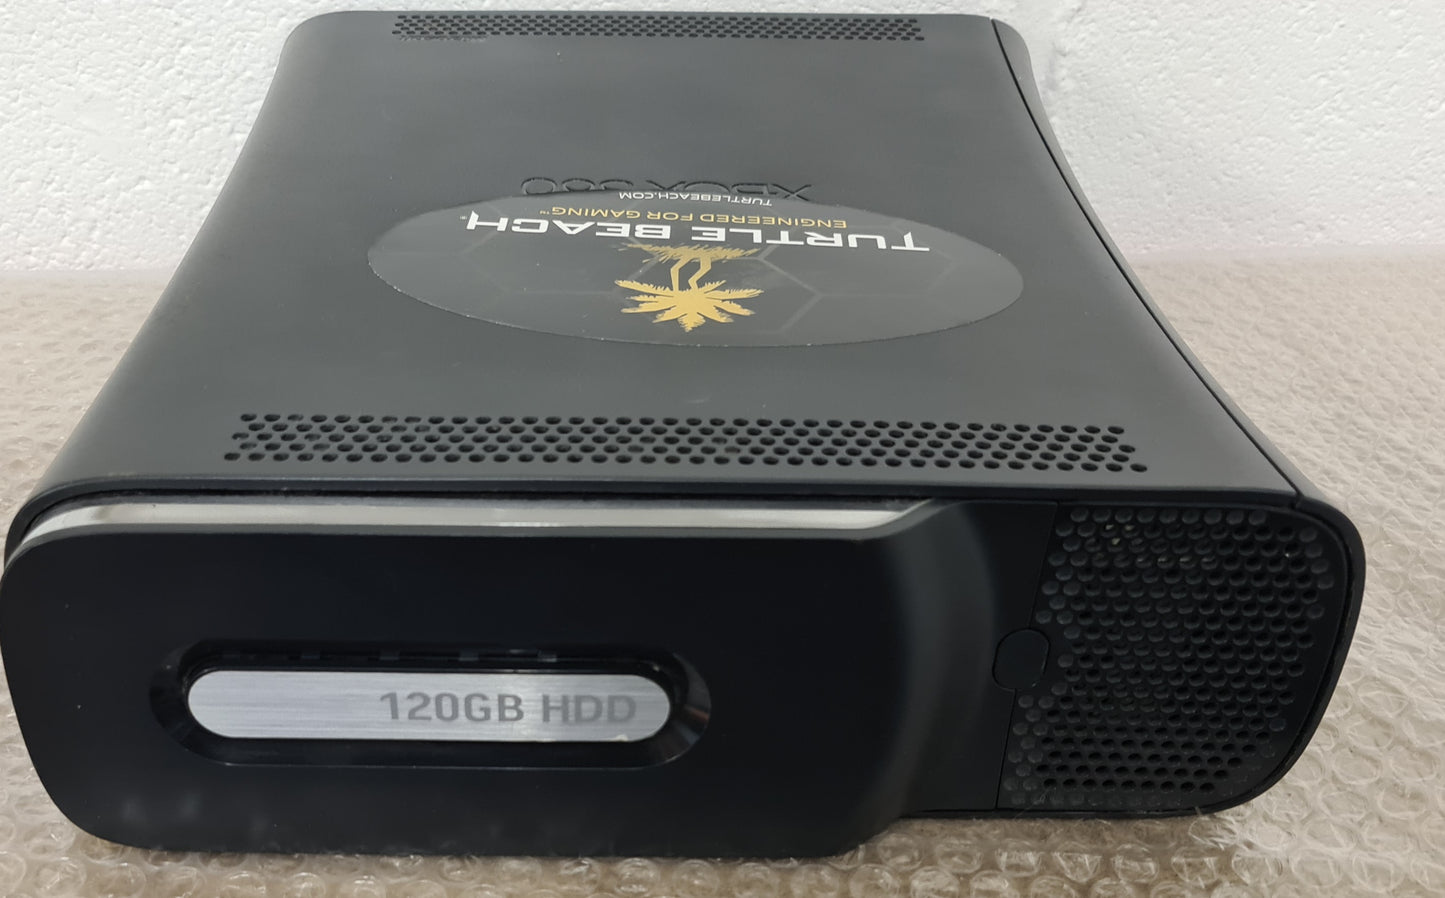 Black Microsoft Xbox 360 Console with 120GB HDD